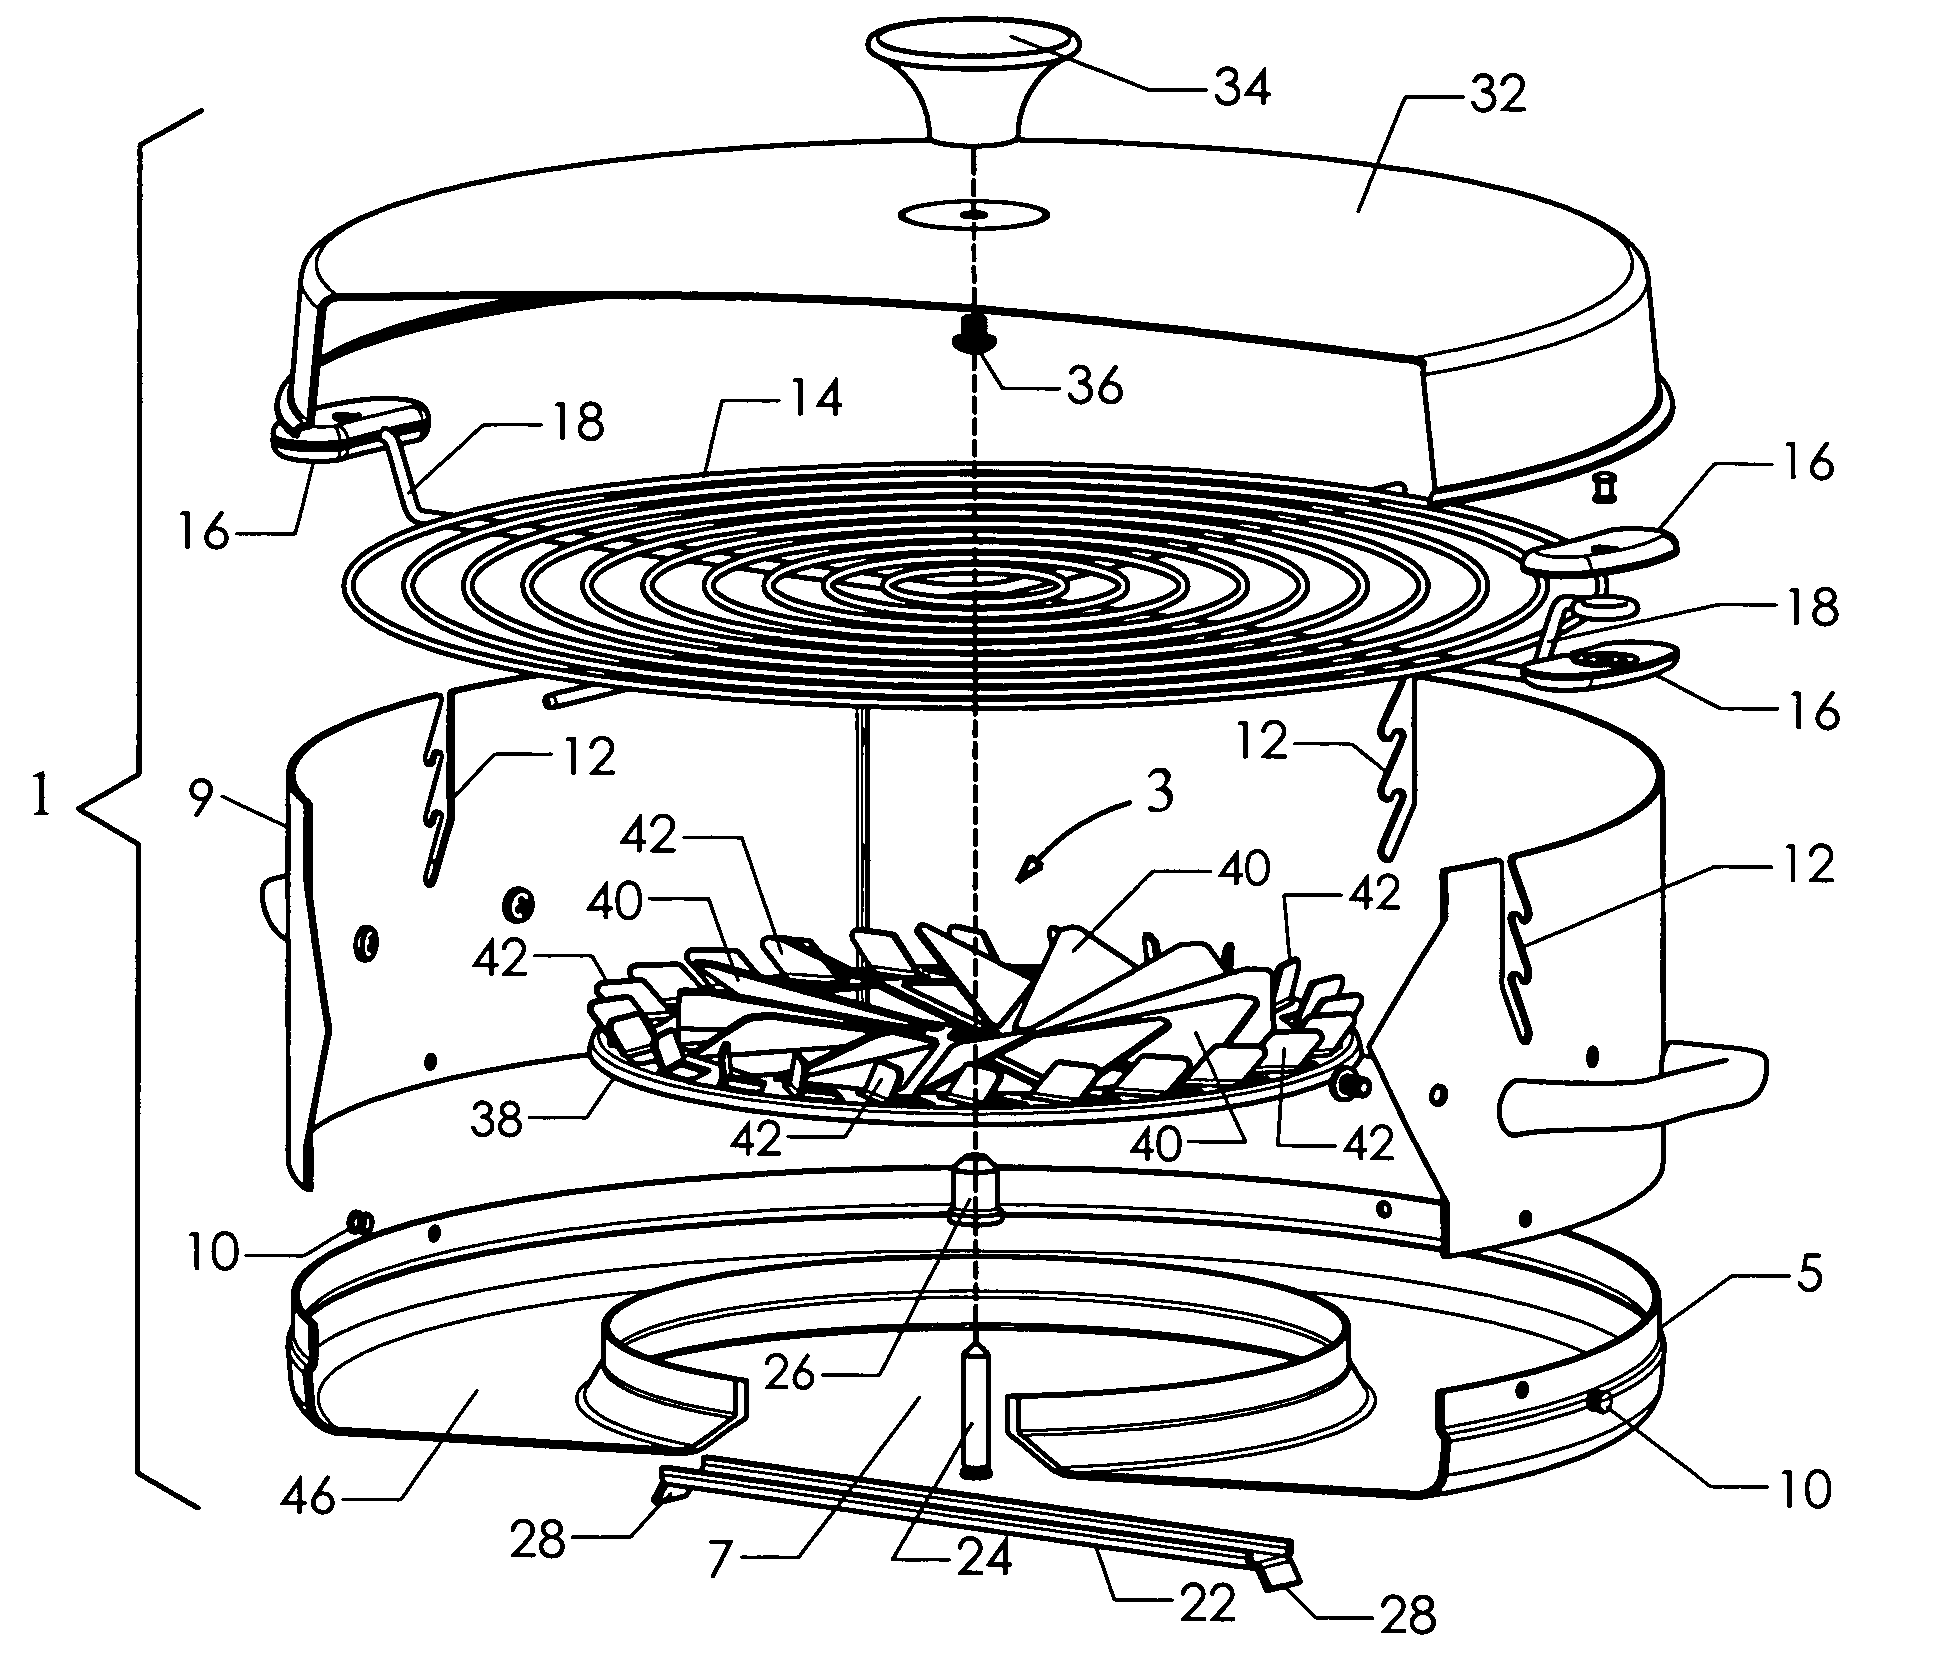 Stovetop grill having heat distributing rotor